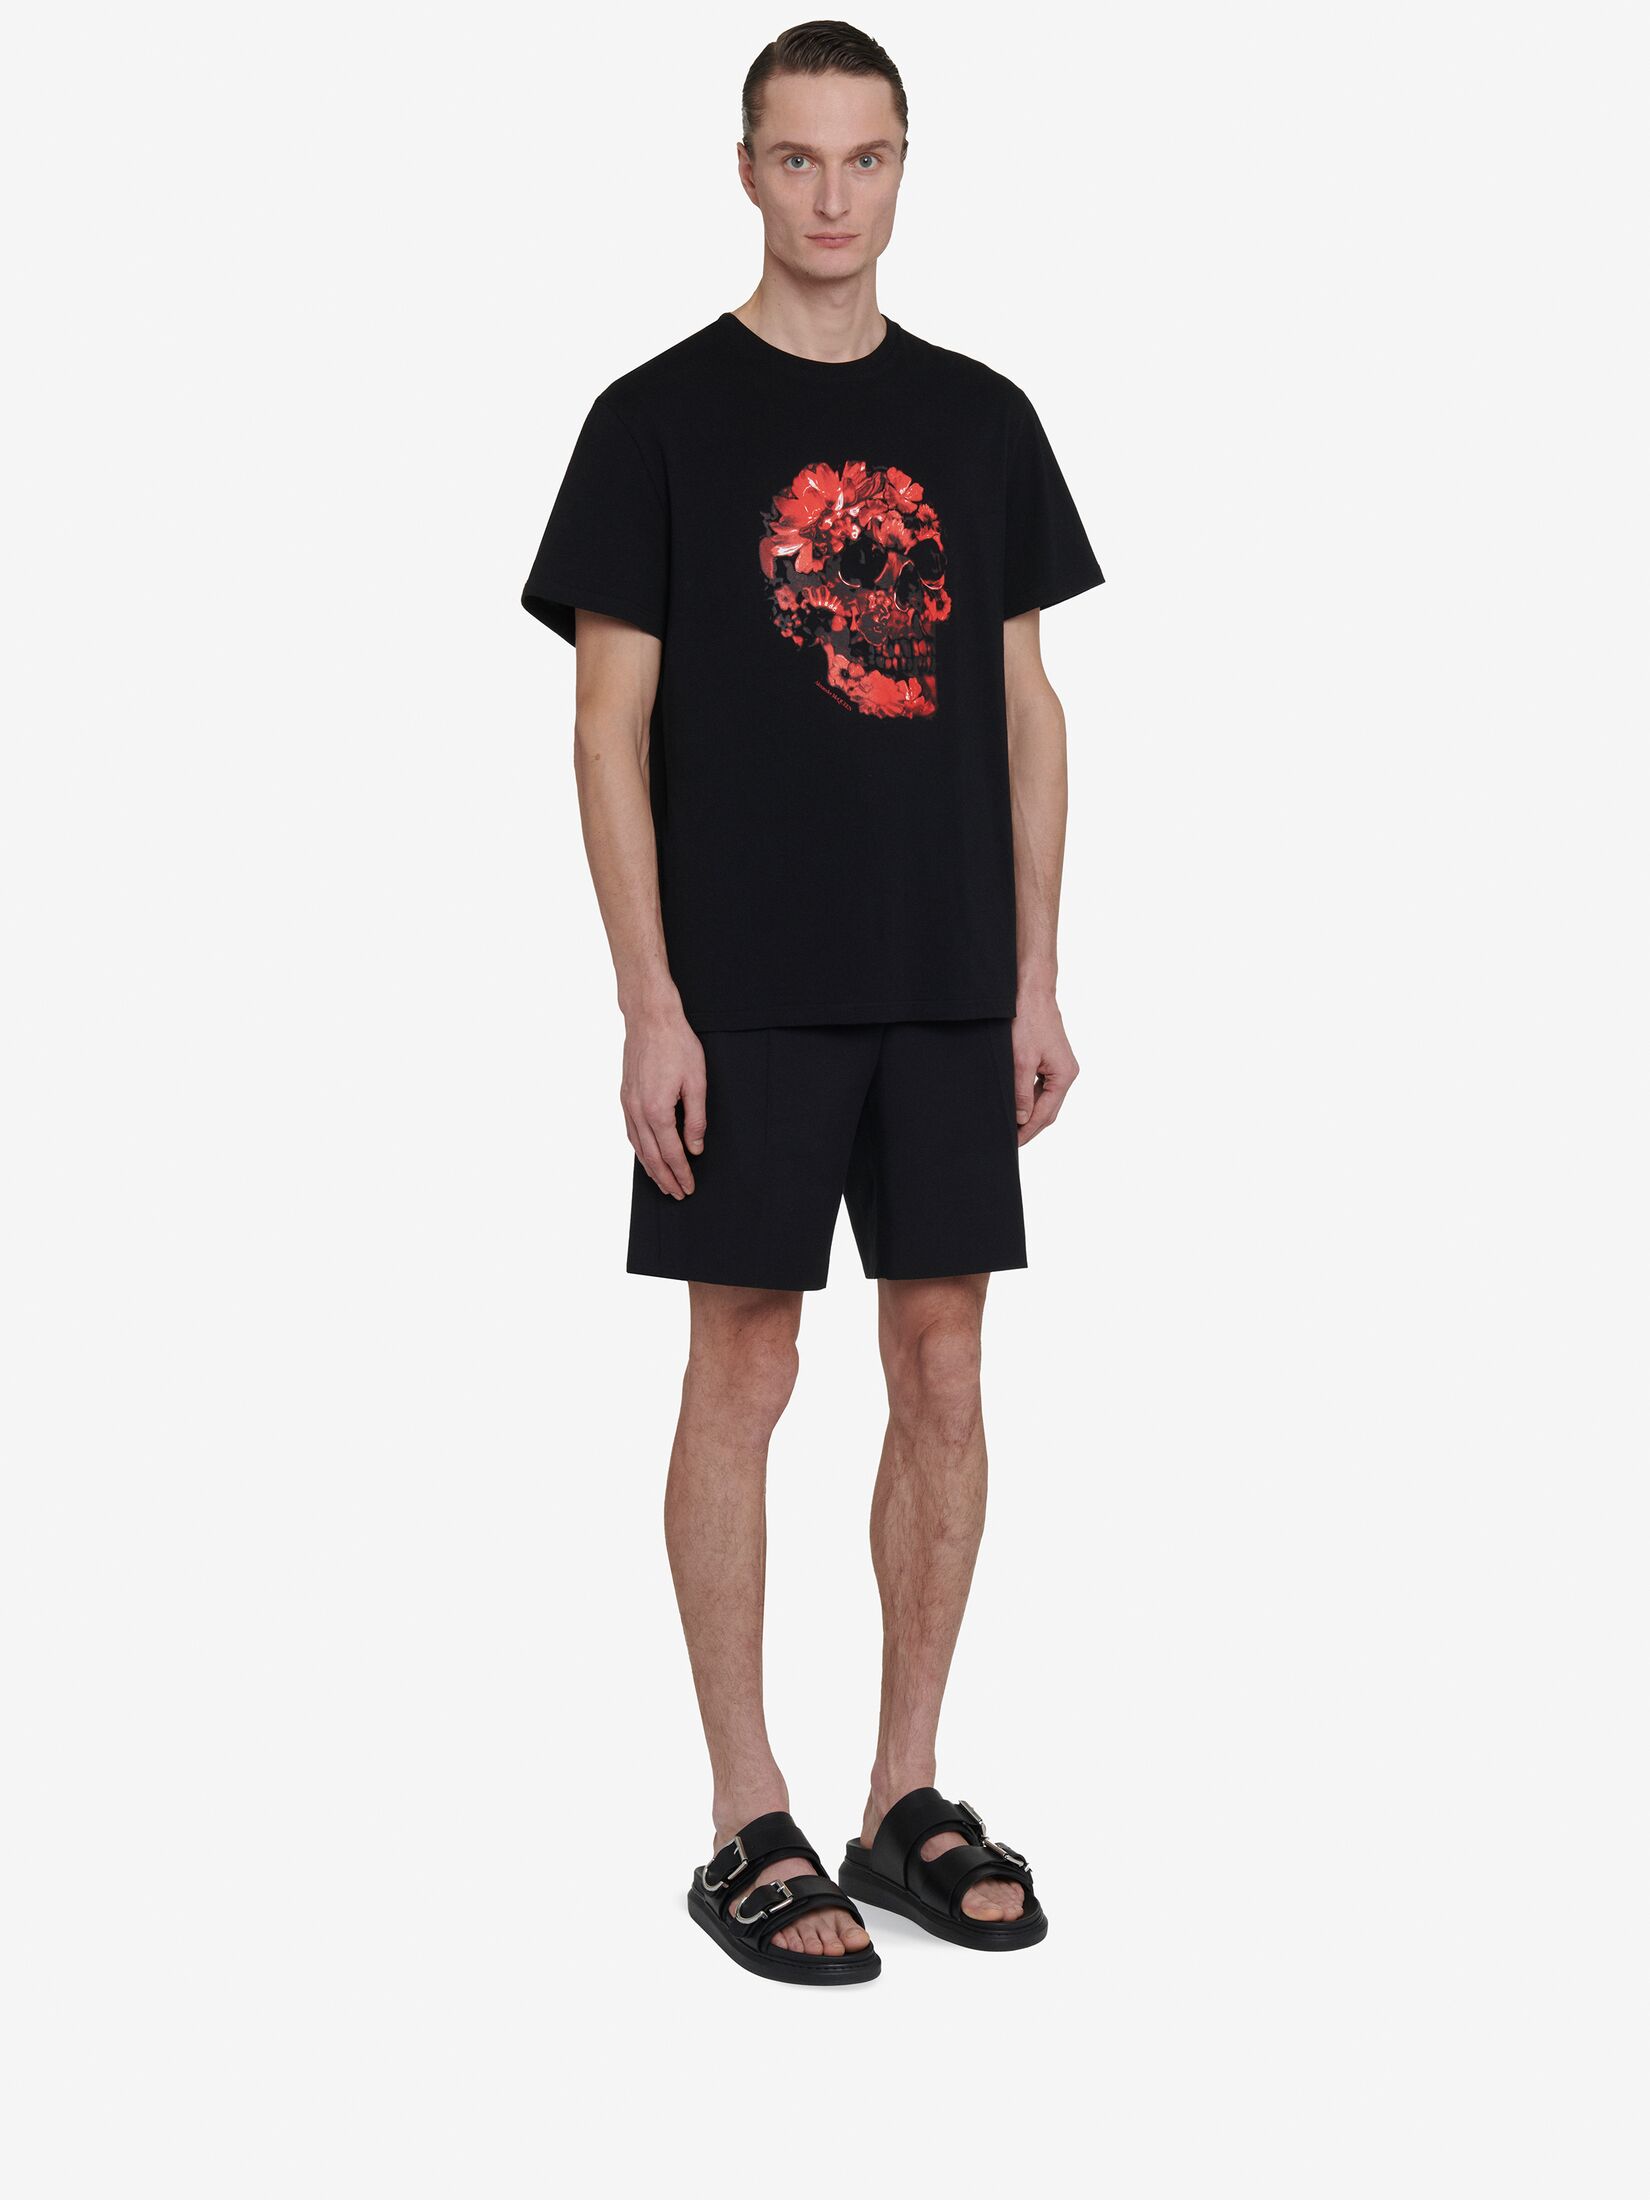 T-shirt Wax Flower Skull